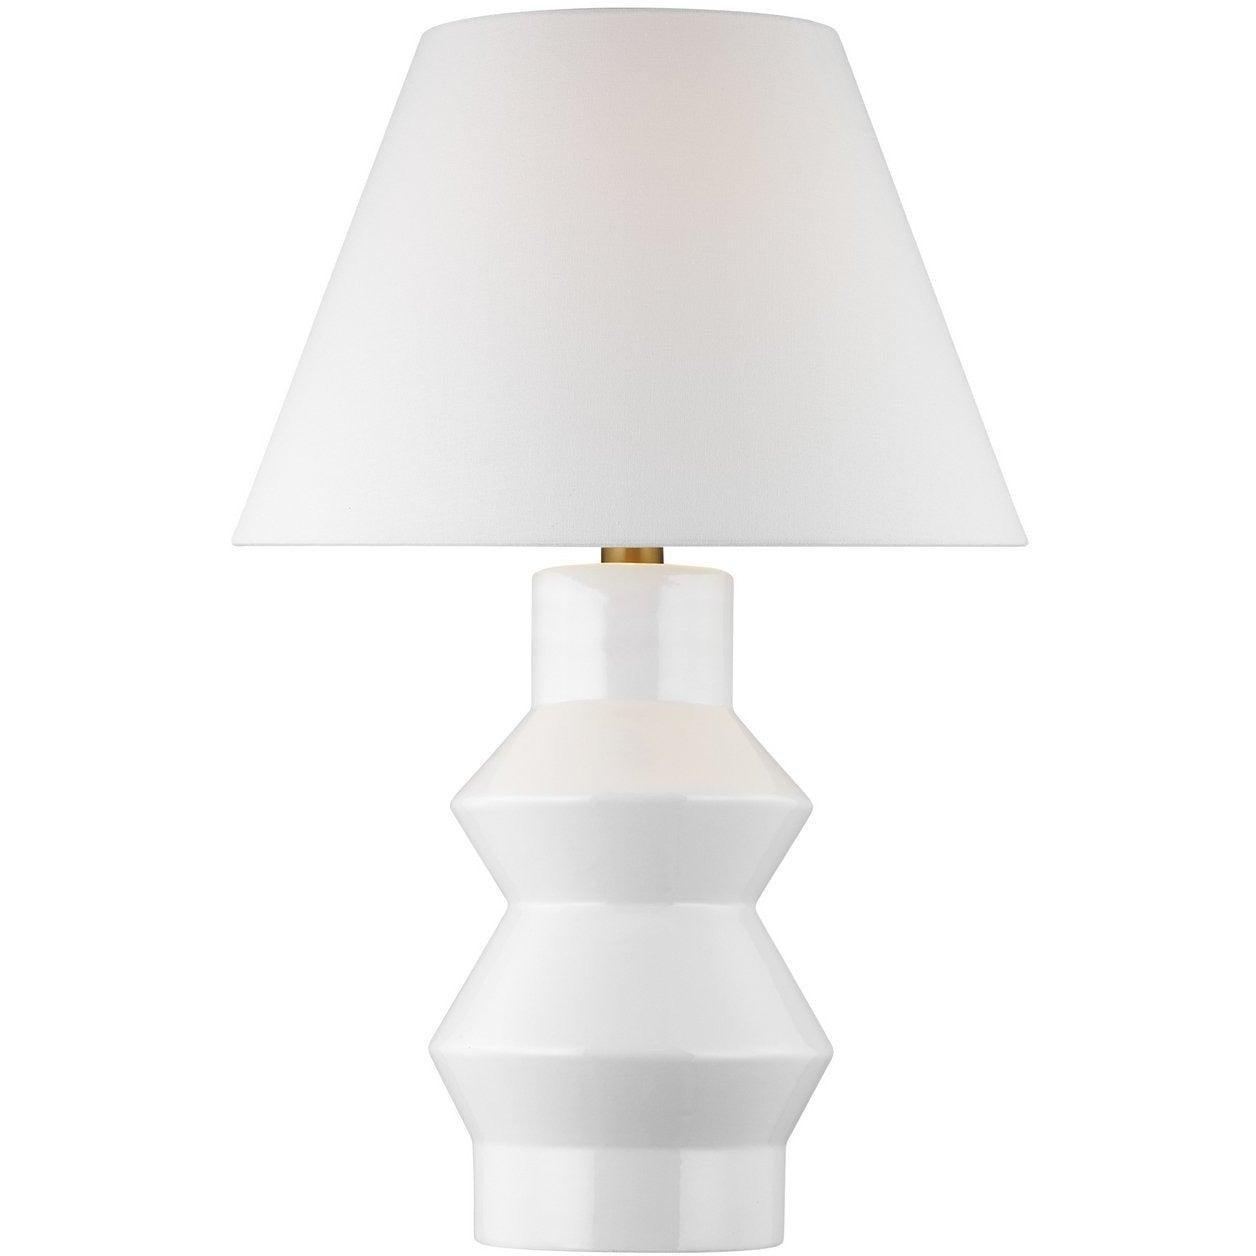 DJT1011SB1 by Visual Comfort - Porteau Medium Table Lamp Satin